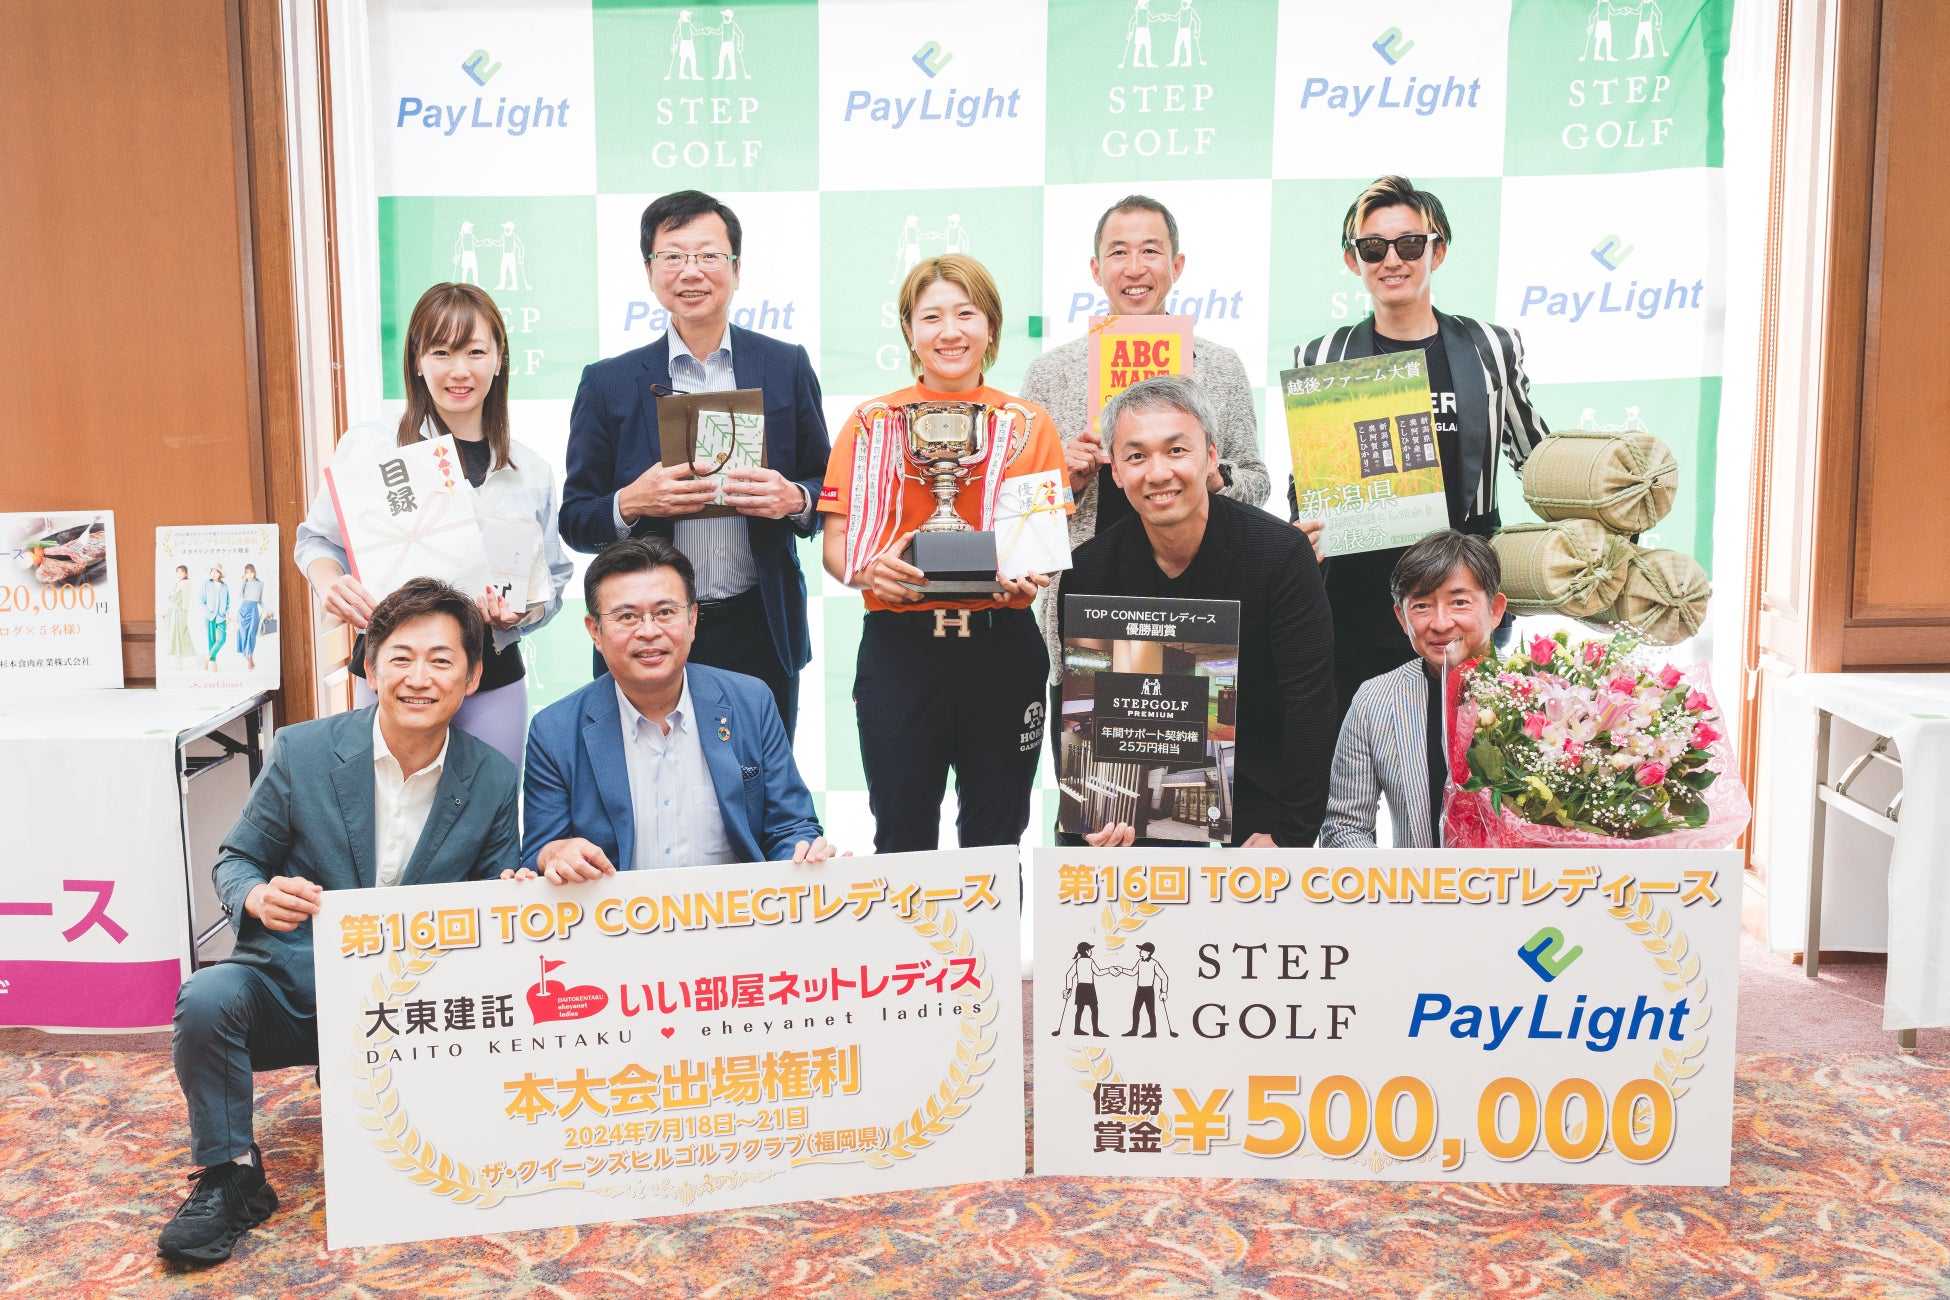 「CAPCOM Pro Tour 2024 ワールドウォリアー 日本大会」の開催が決定！　パブリックビューイングも開催！